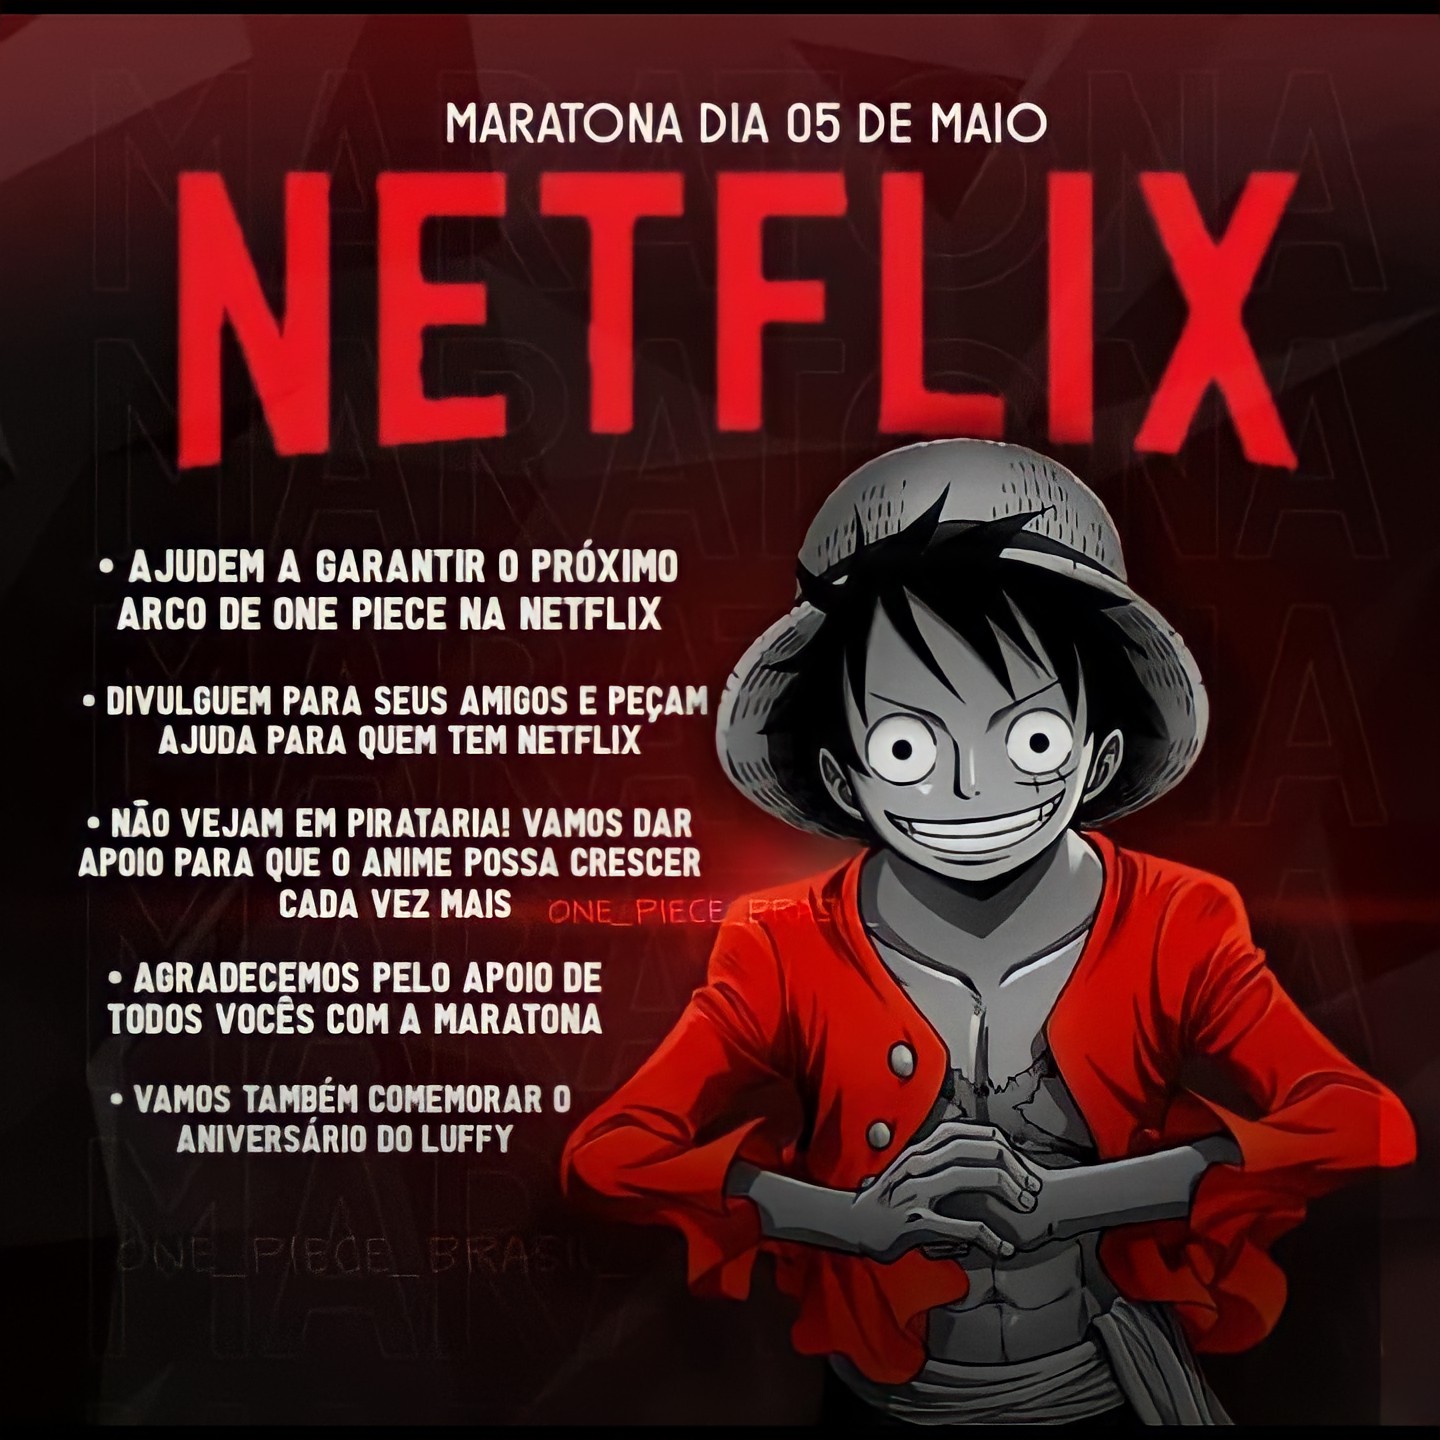 One Piece Netflix Brasil on X: Hoje é #LuffyDay, aniversário do